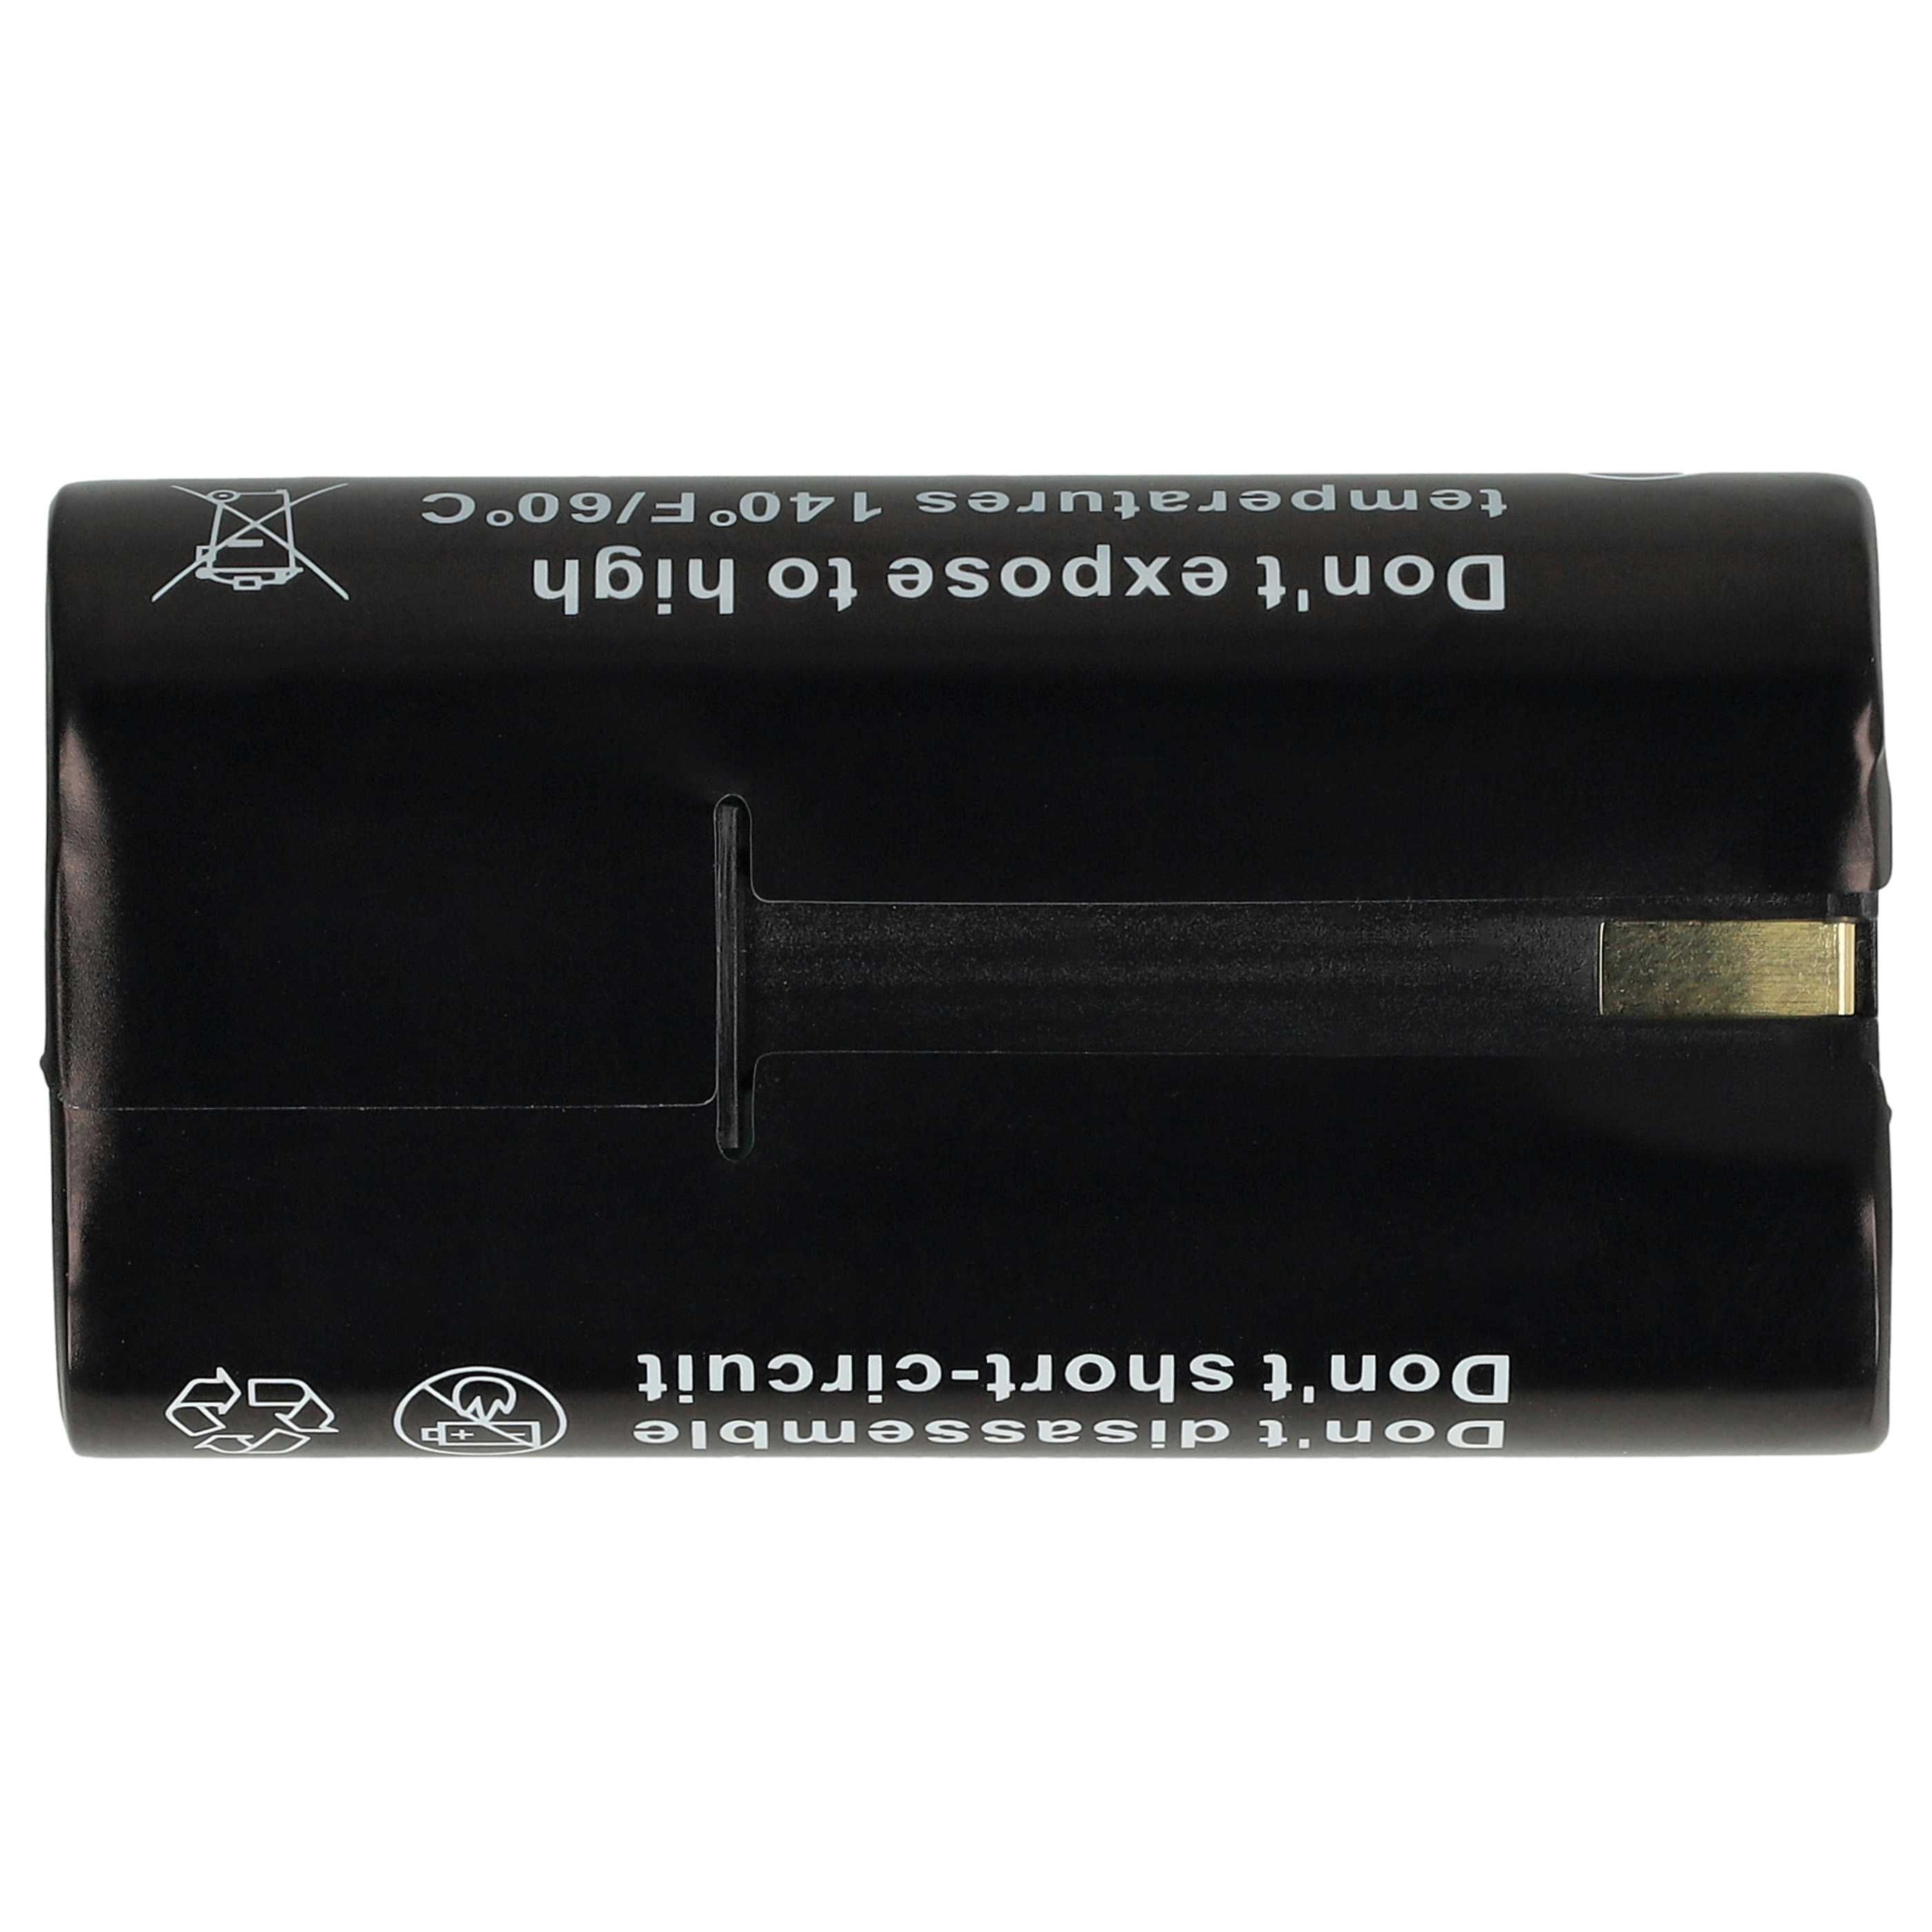 Batería reemplaza Kodak Klic-8000, RB50 para cámara Jay-Tech - 1520 mAh 3,6 V Li-Ion